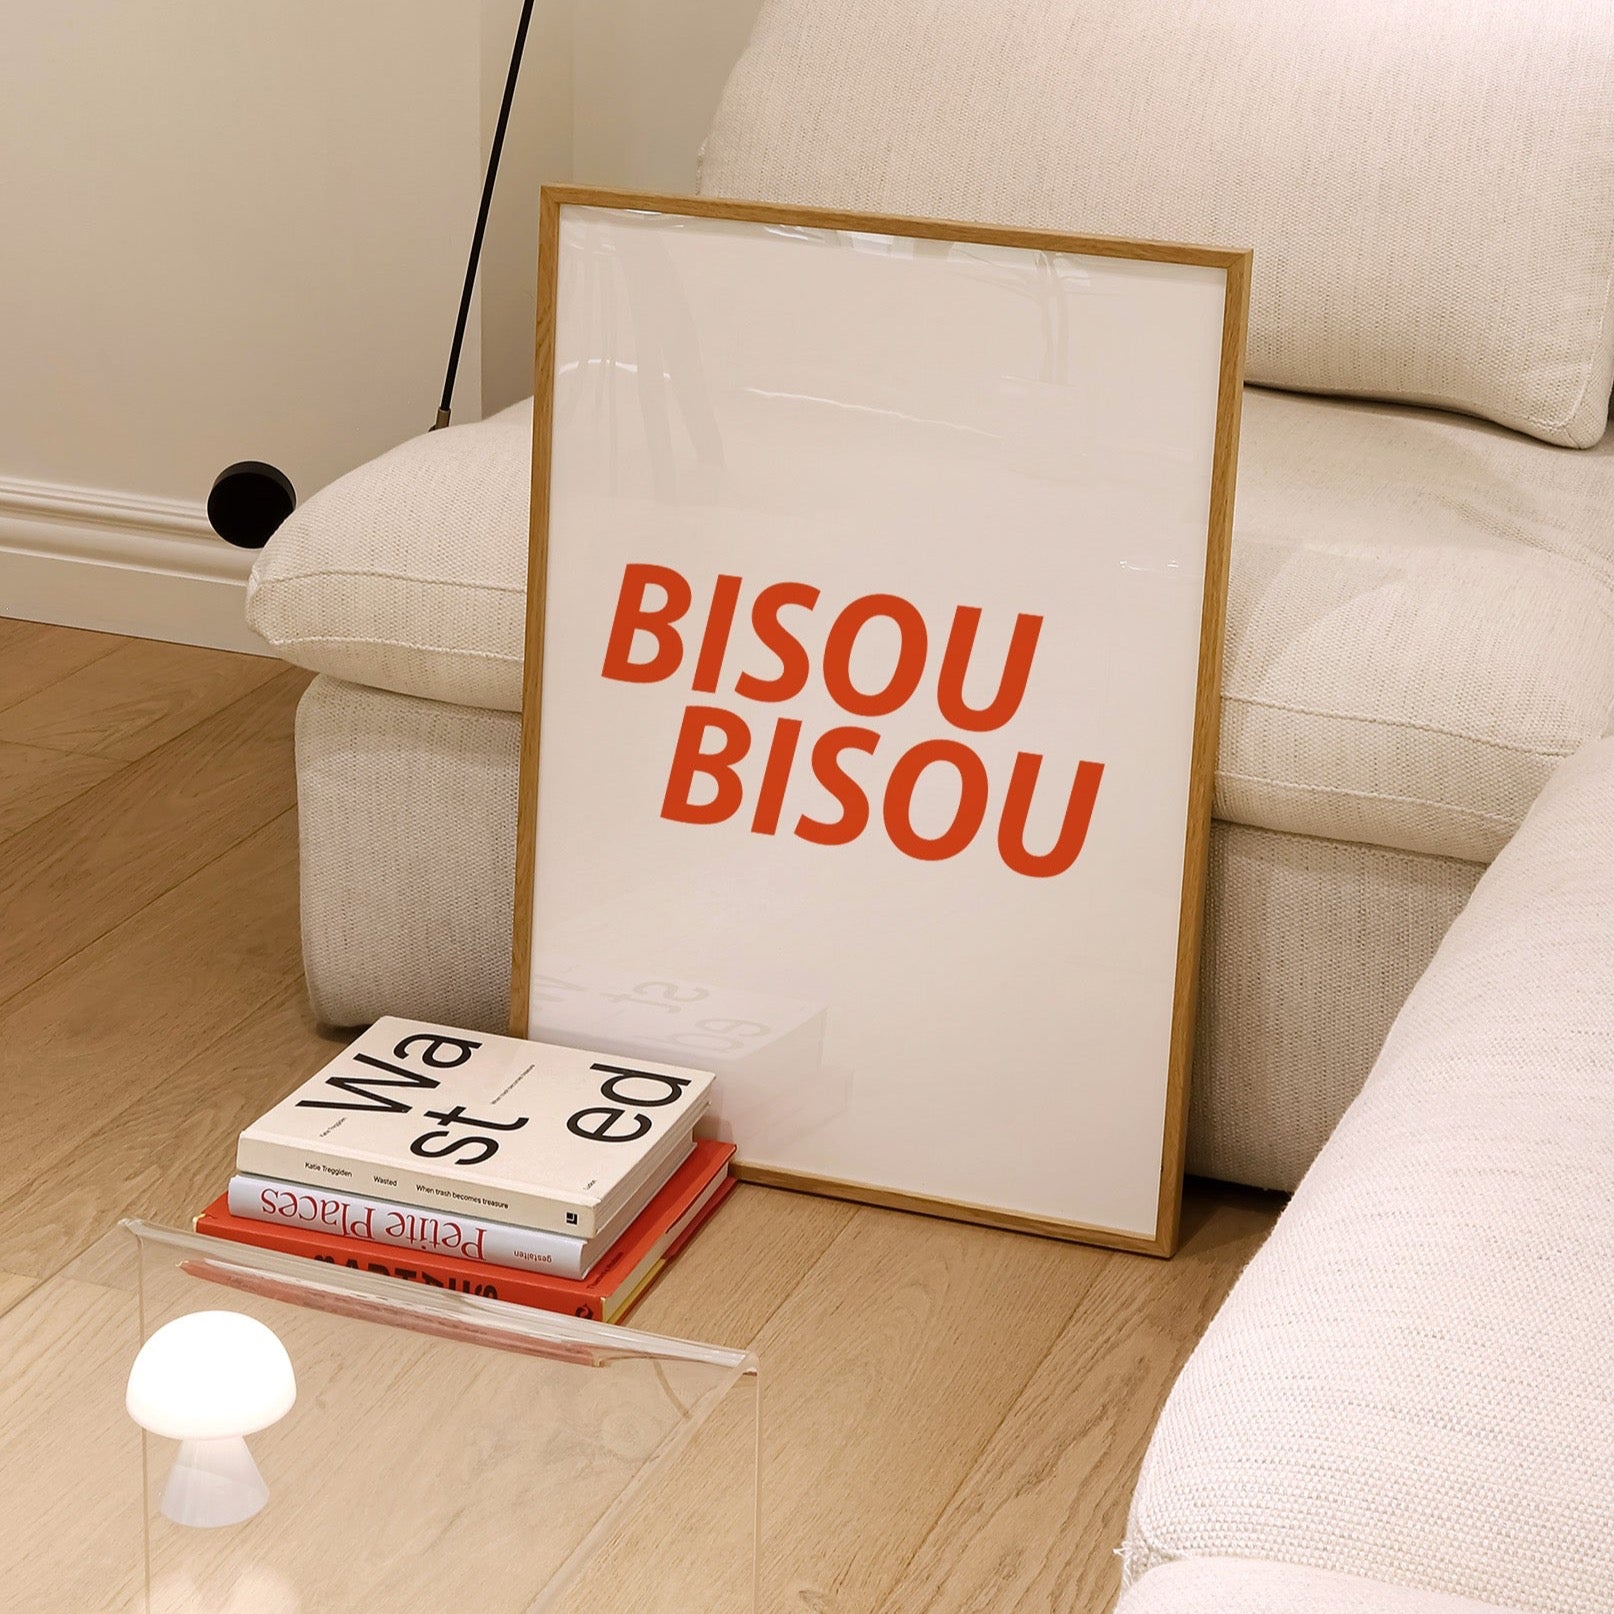 Bisou Bisou French retro Giclée Art Print